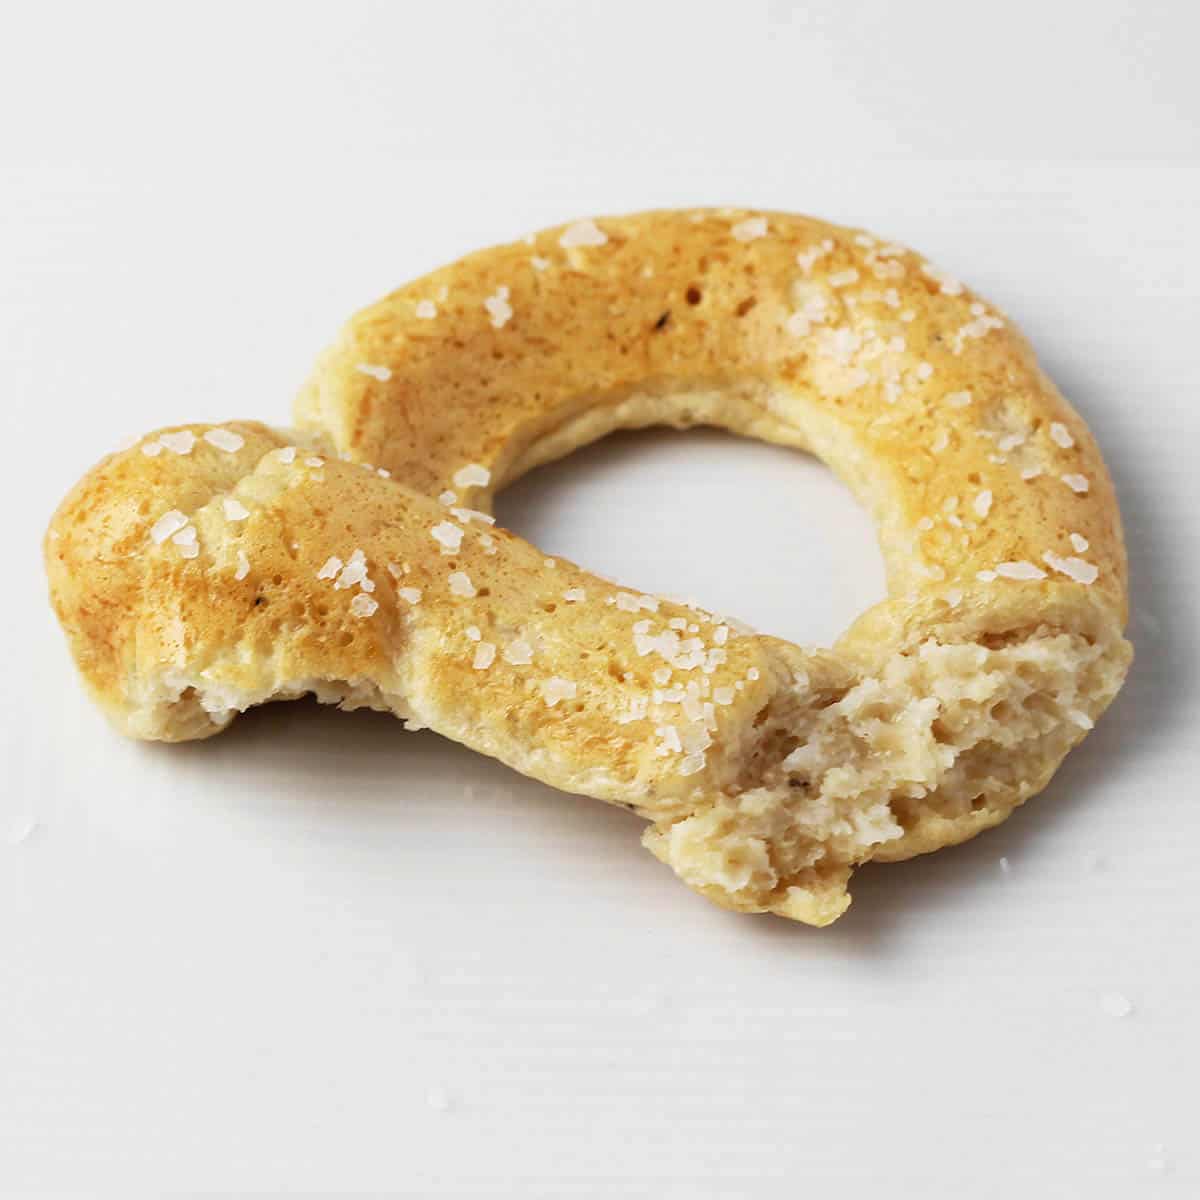 partially eaten protein pretzel with coarse salt on a white plate